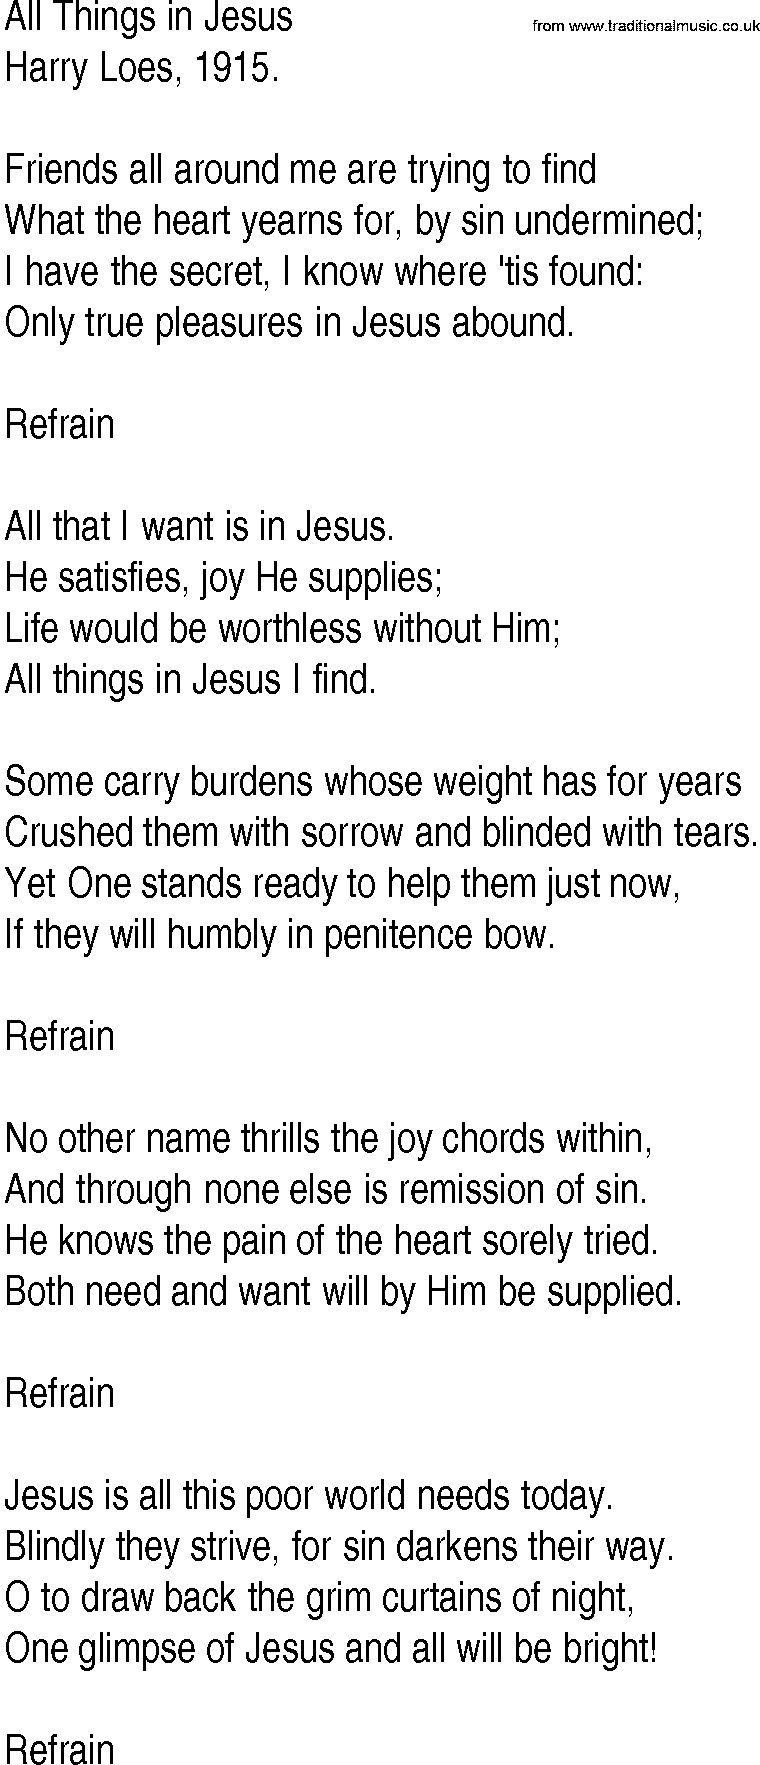 Hymn and Gospel Song: All Things in Jesus by Harry Loes lyrics